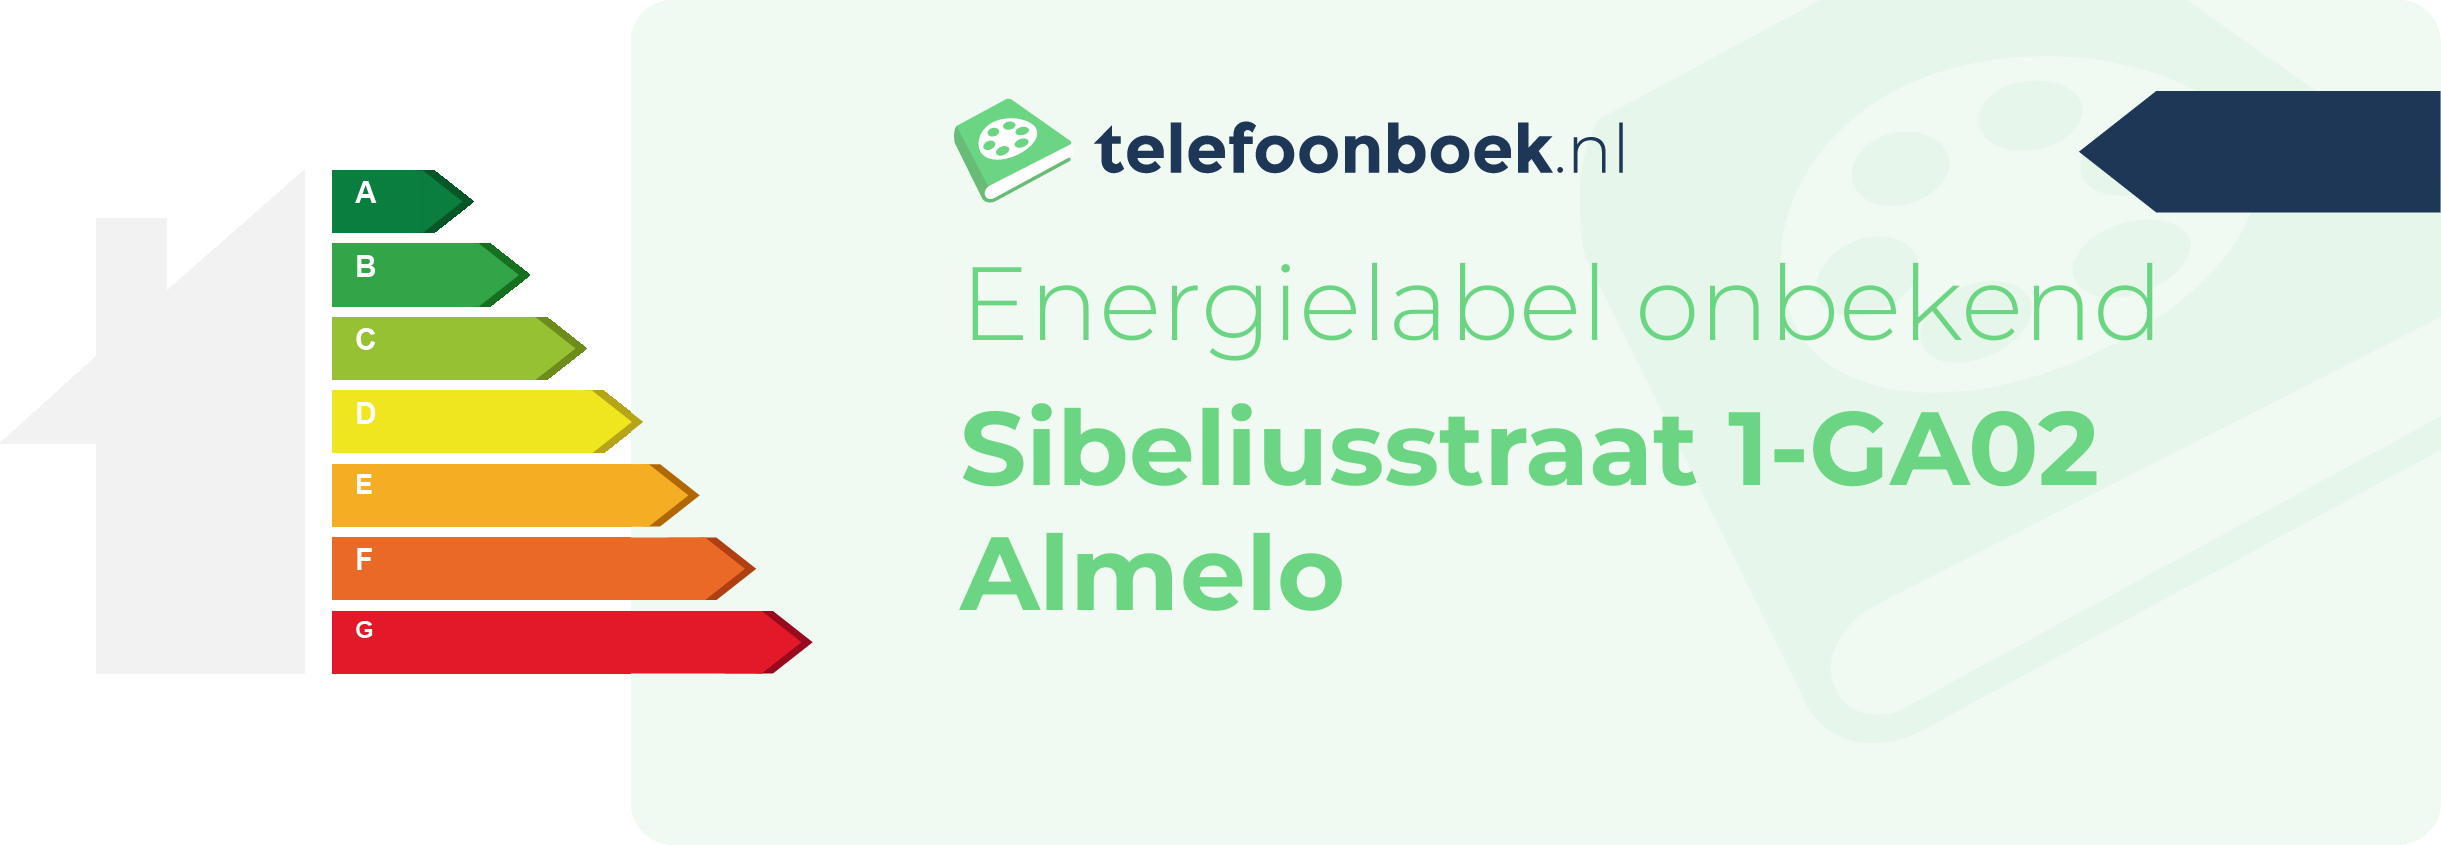 Energielabel Sibeliusstraat 1-GA02 Almelo